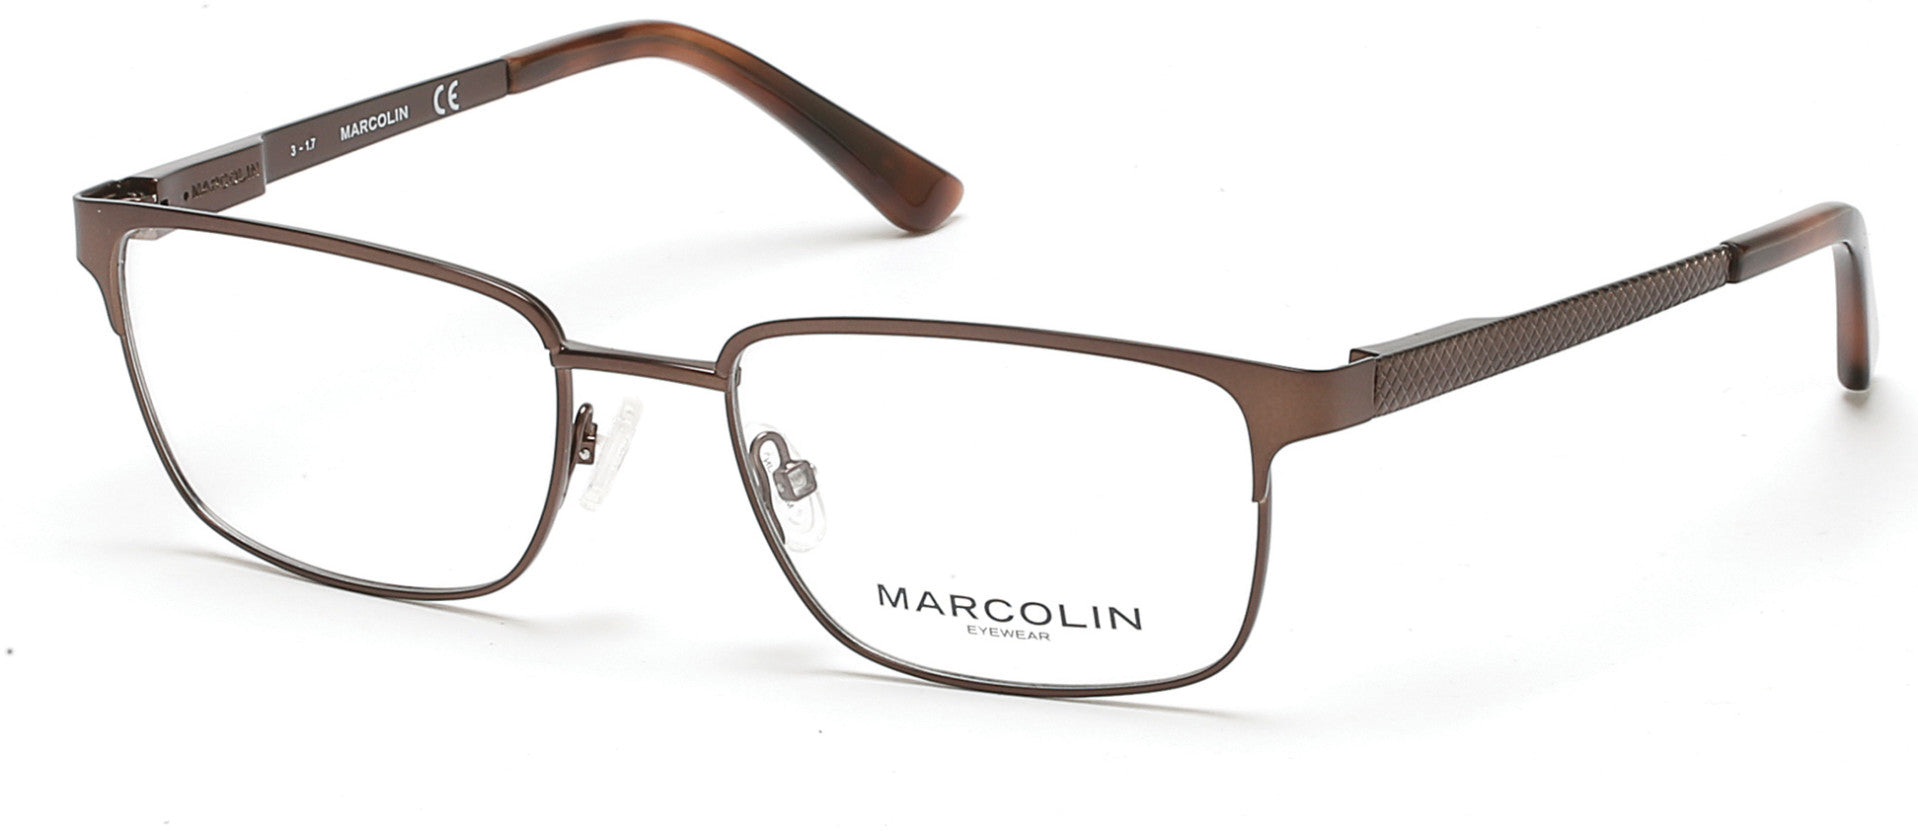 Marcolin MA3000 Eyeglasses 049-049 - Matte Dark Brown